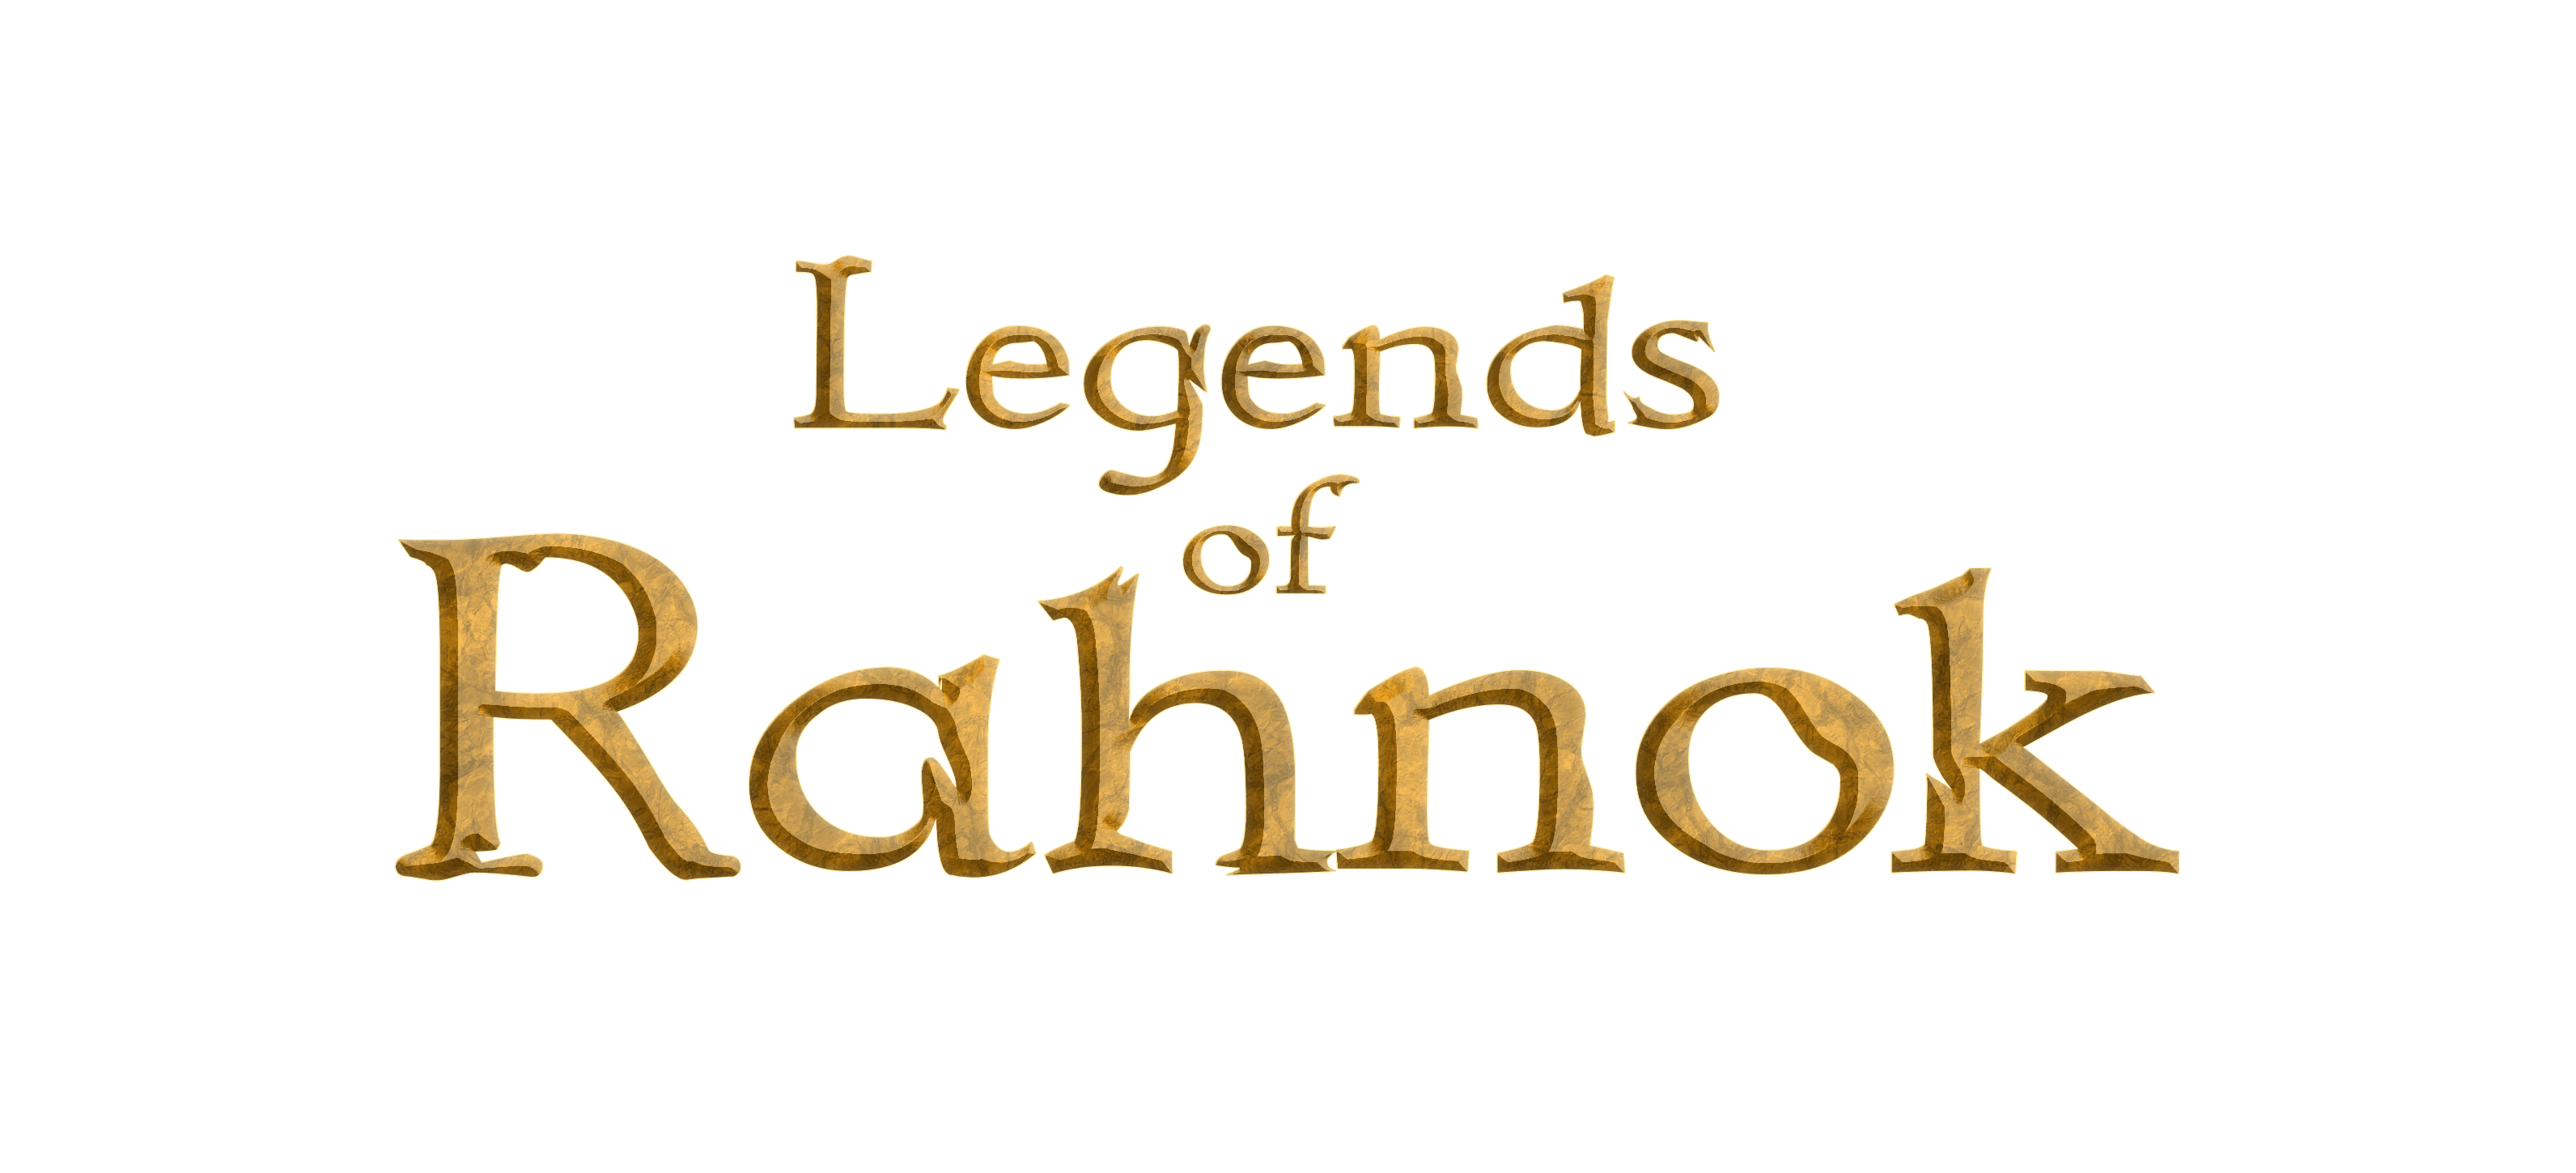 Legends of Rahnok